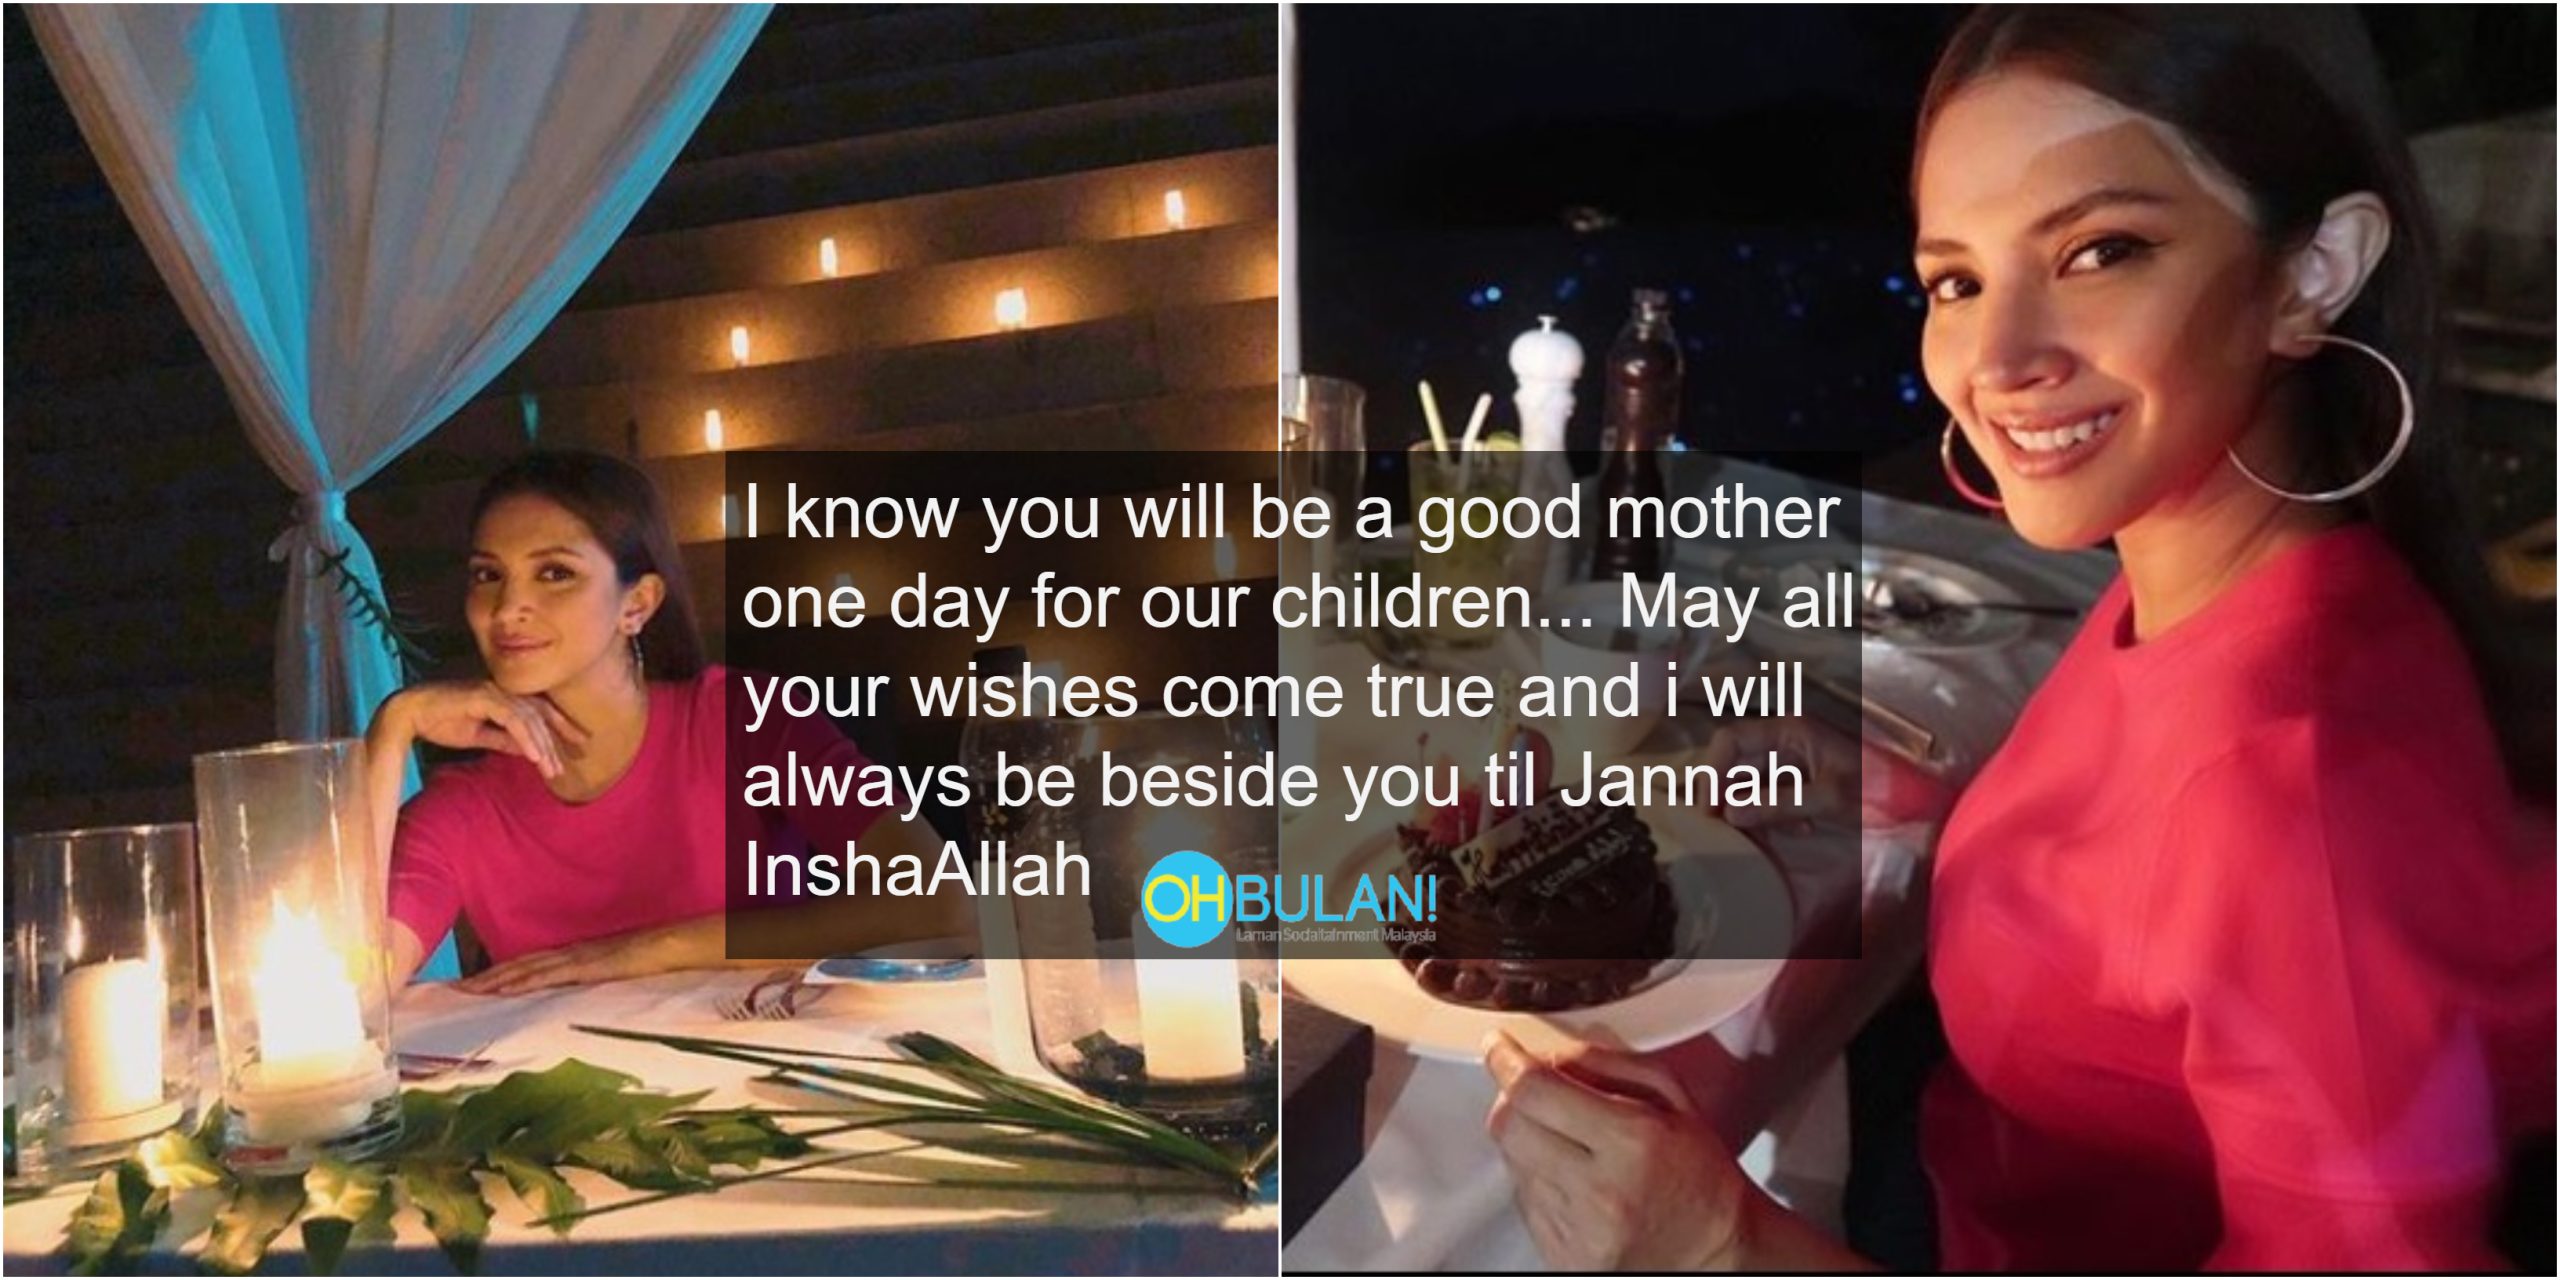 ‘You Will Be A Good Mother For Our Children’ – Ucapan Bersemut Fattah Buat Fazura